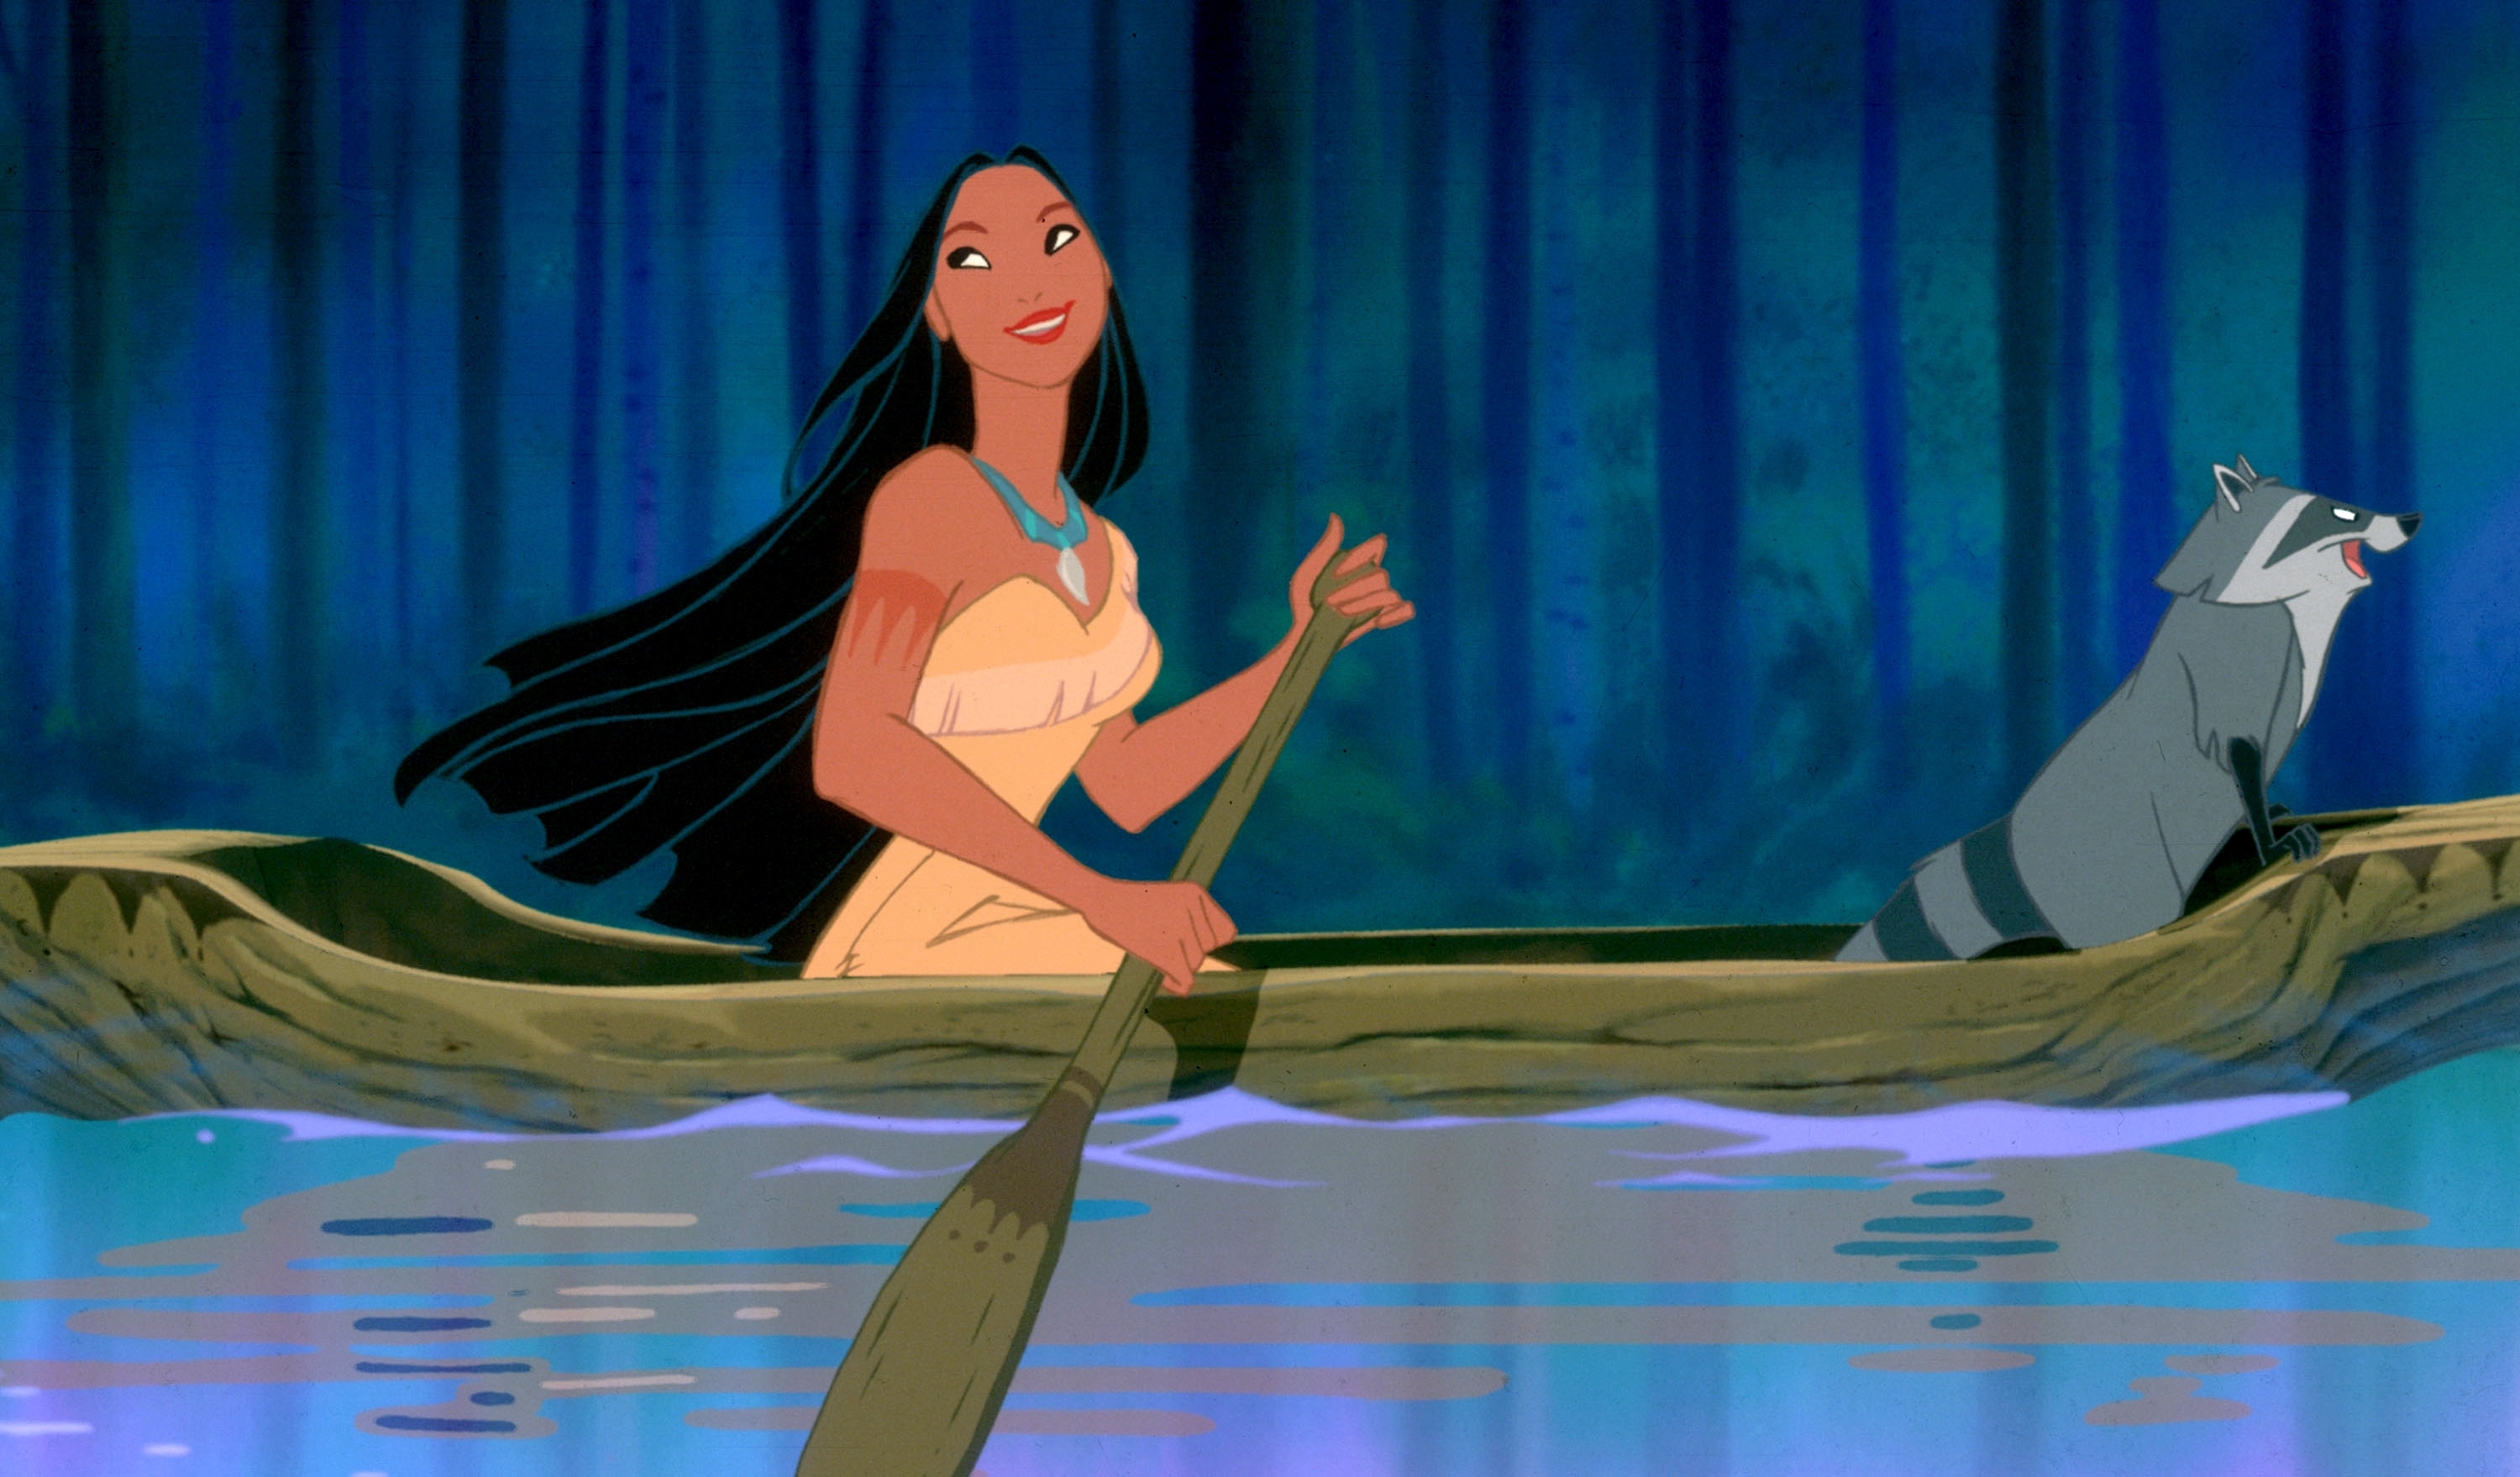 Image du film Pocahontas, une légende indienne f09890f9-2b92-4680-a321-61ab6adacdb3